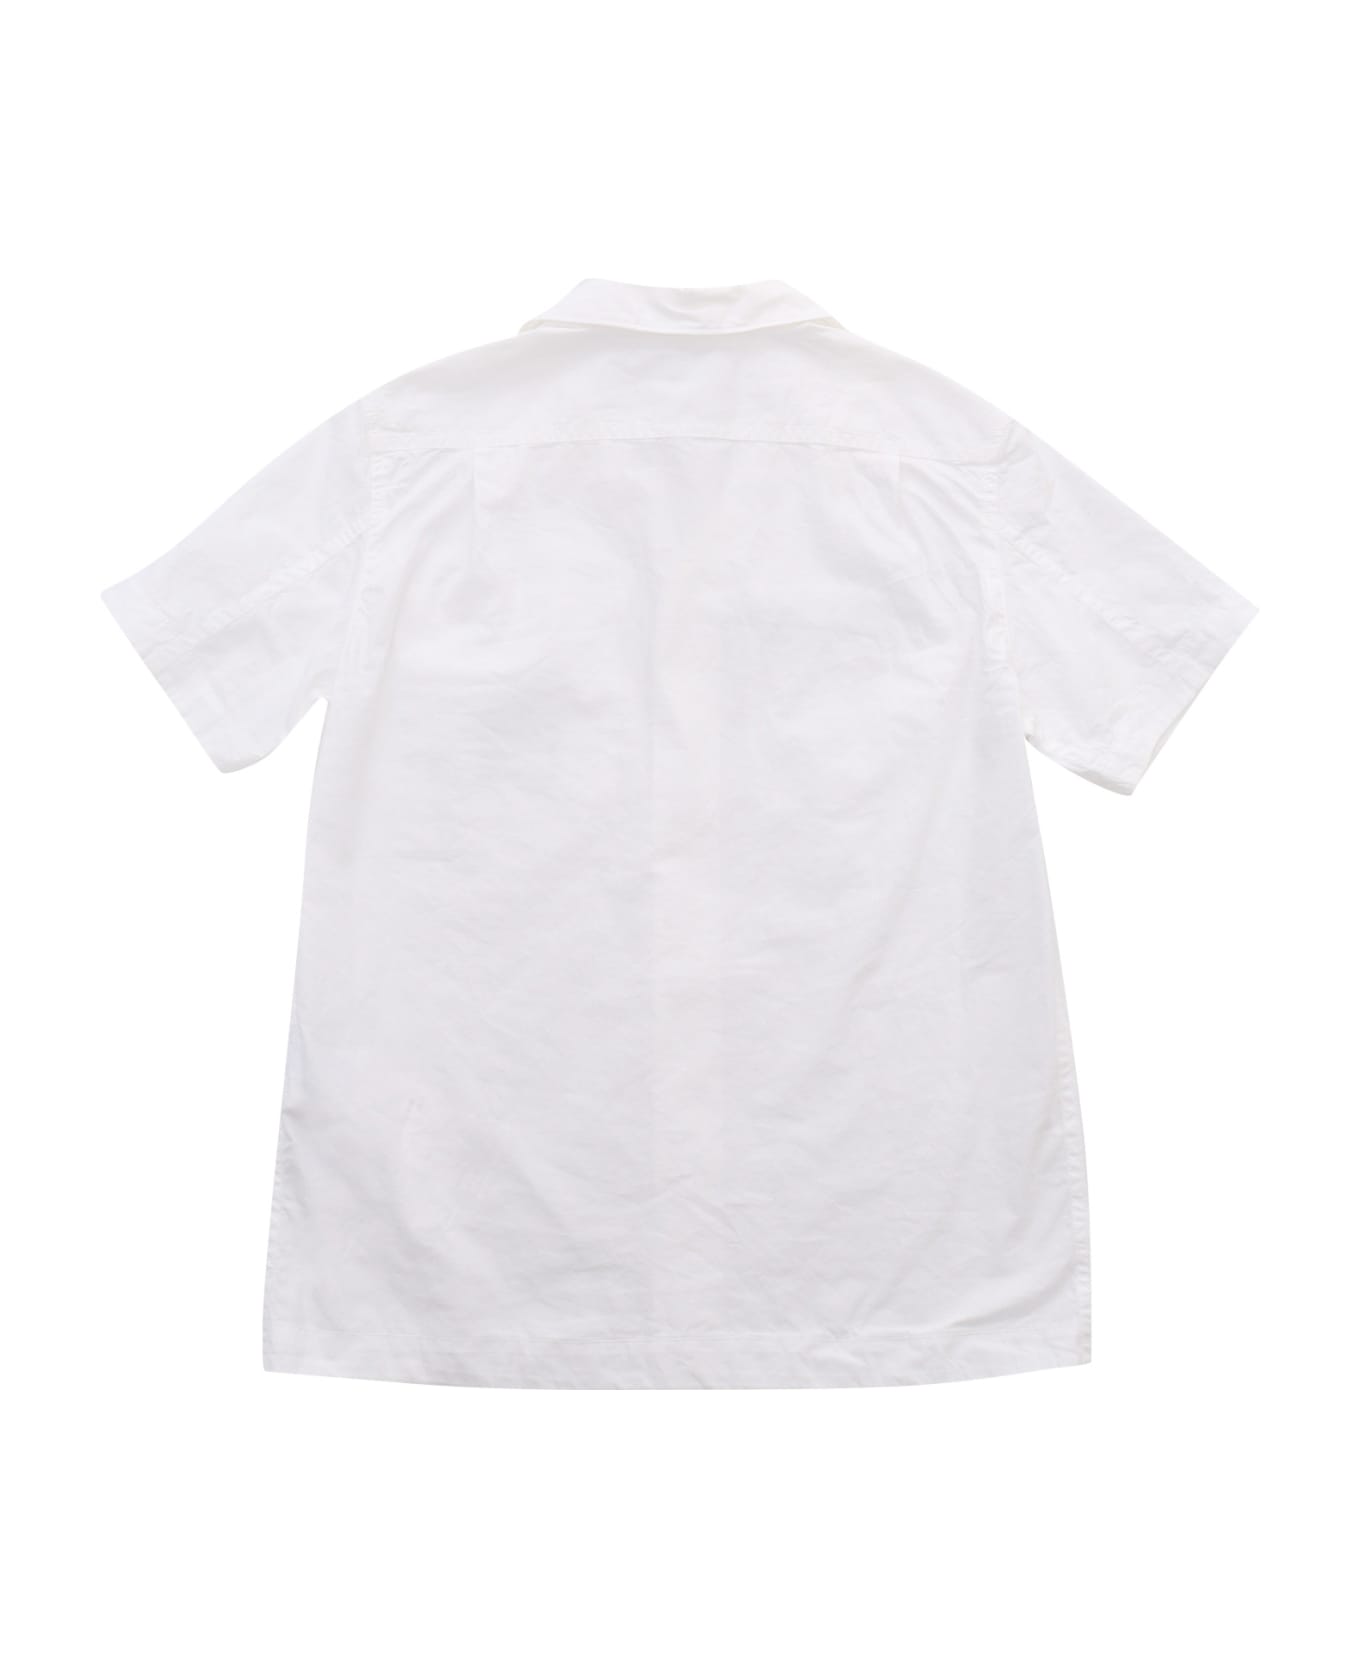 Stone Island Junior Short Sleeves Shirt - WHITE